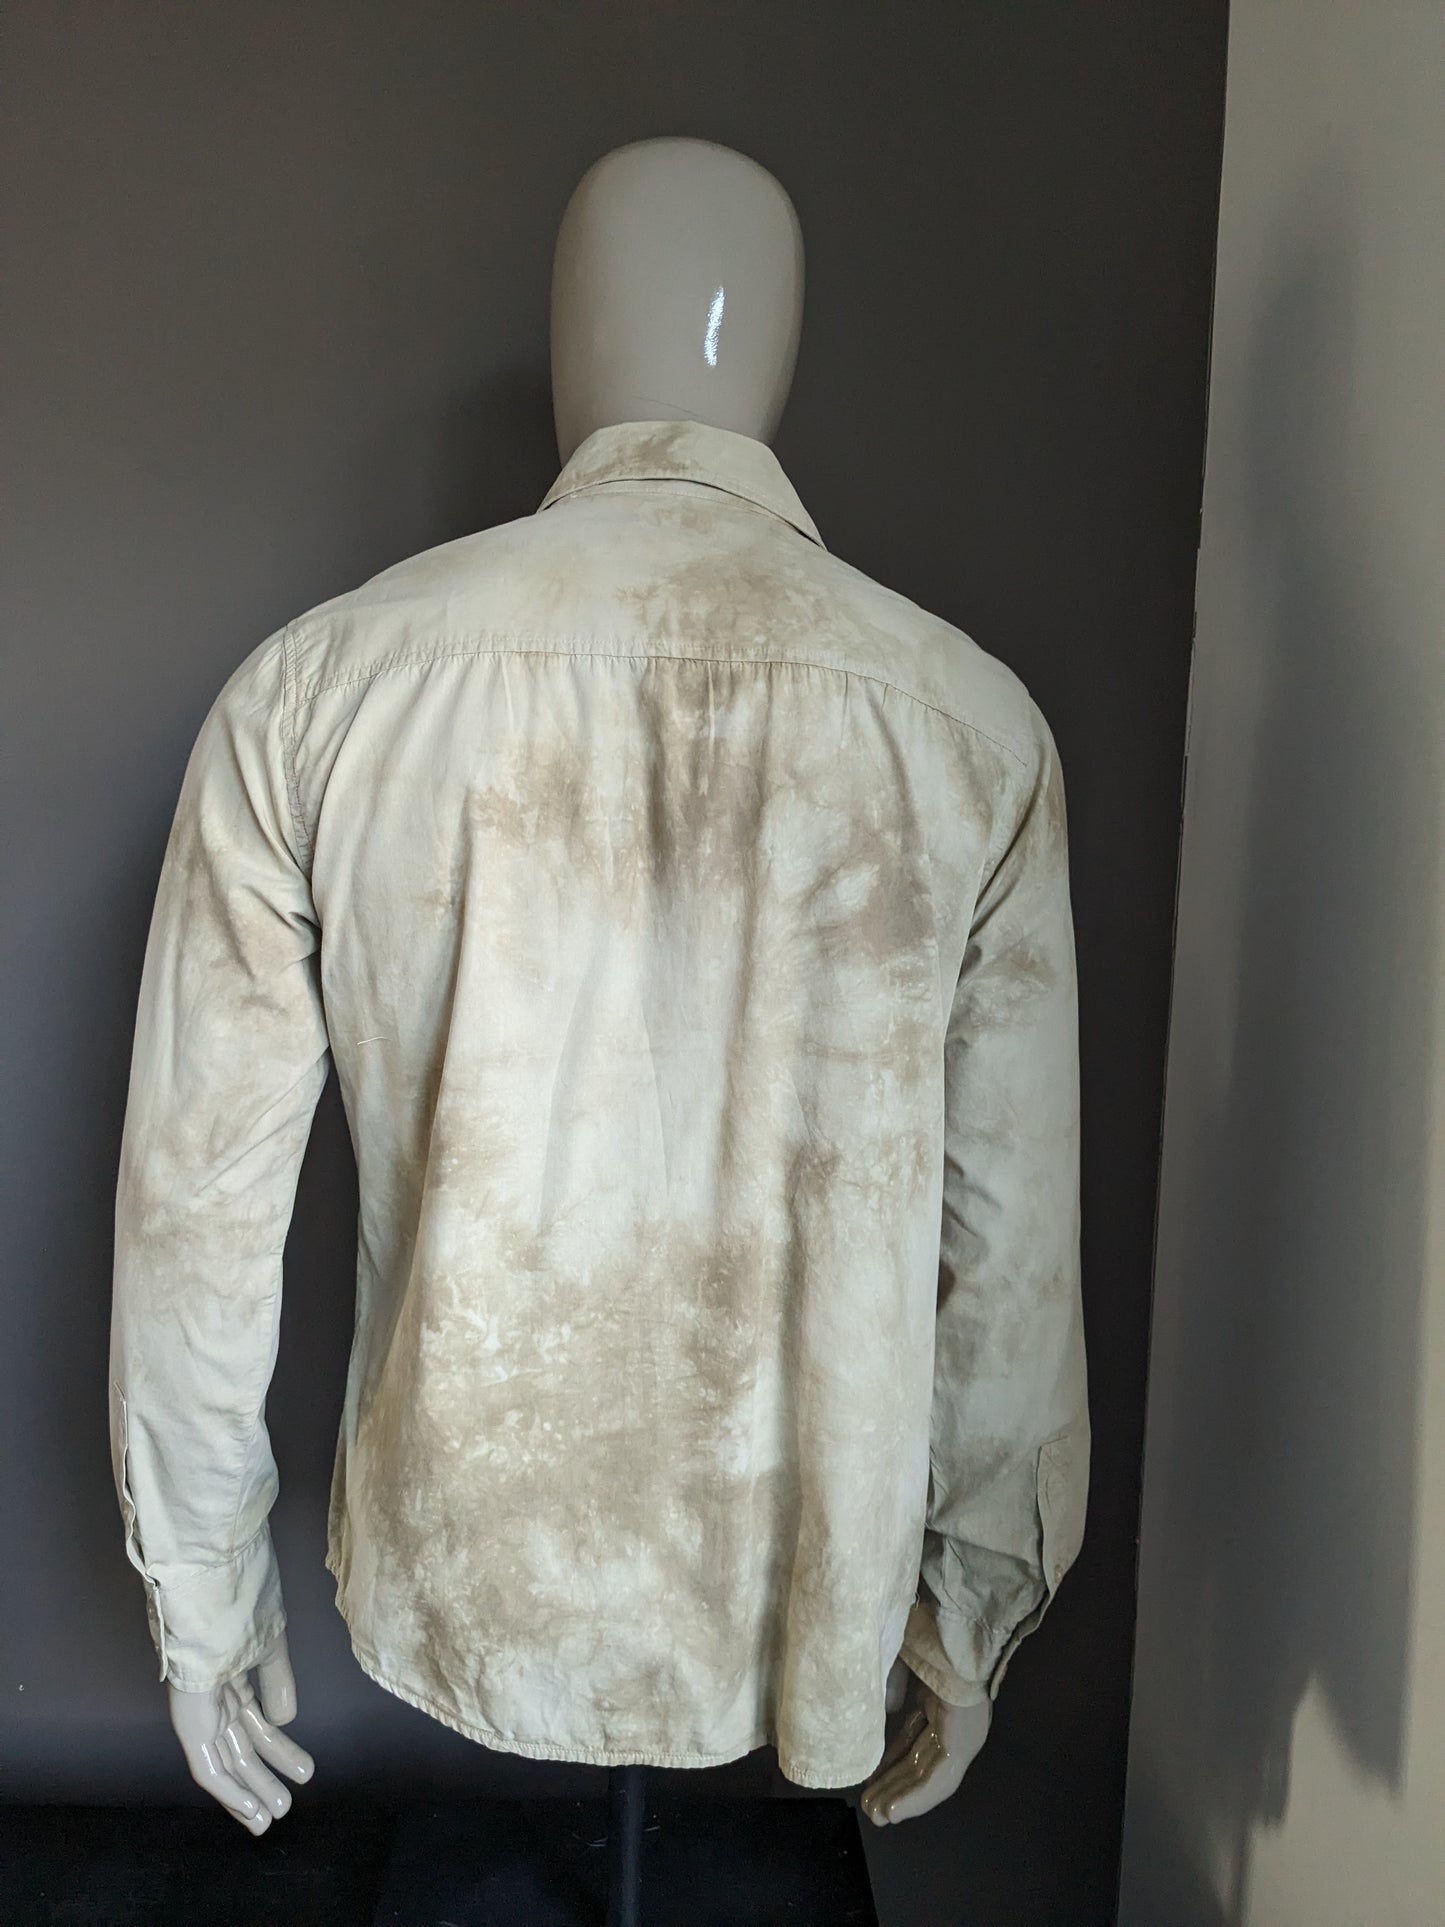 Jack & Jones Vintage Look Shirt con collare punti. Stampa grigio marrone chiaro. Taglia XL.